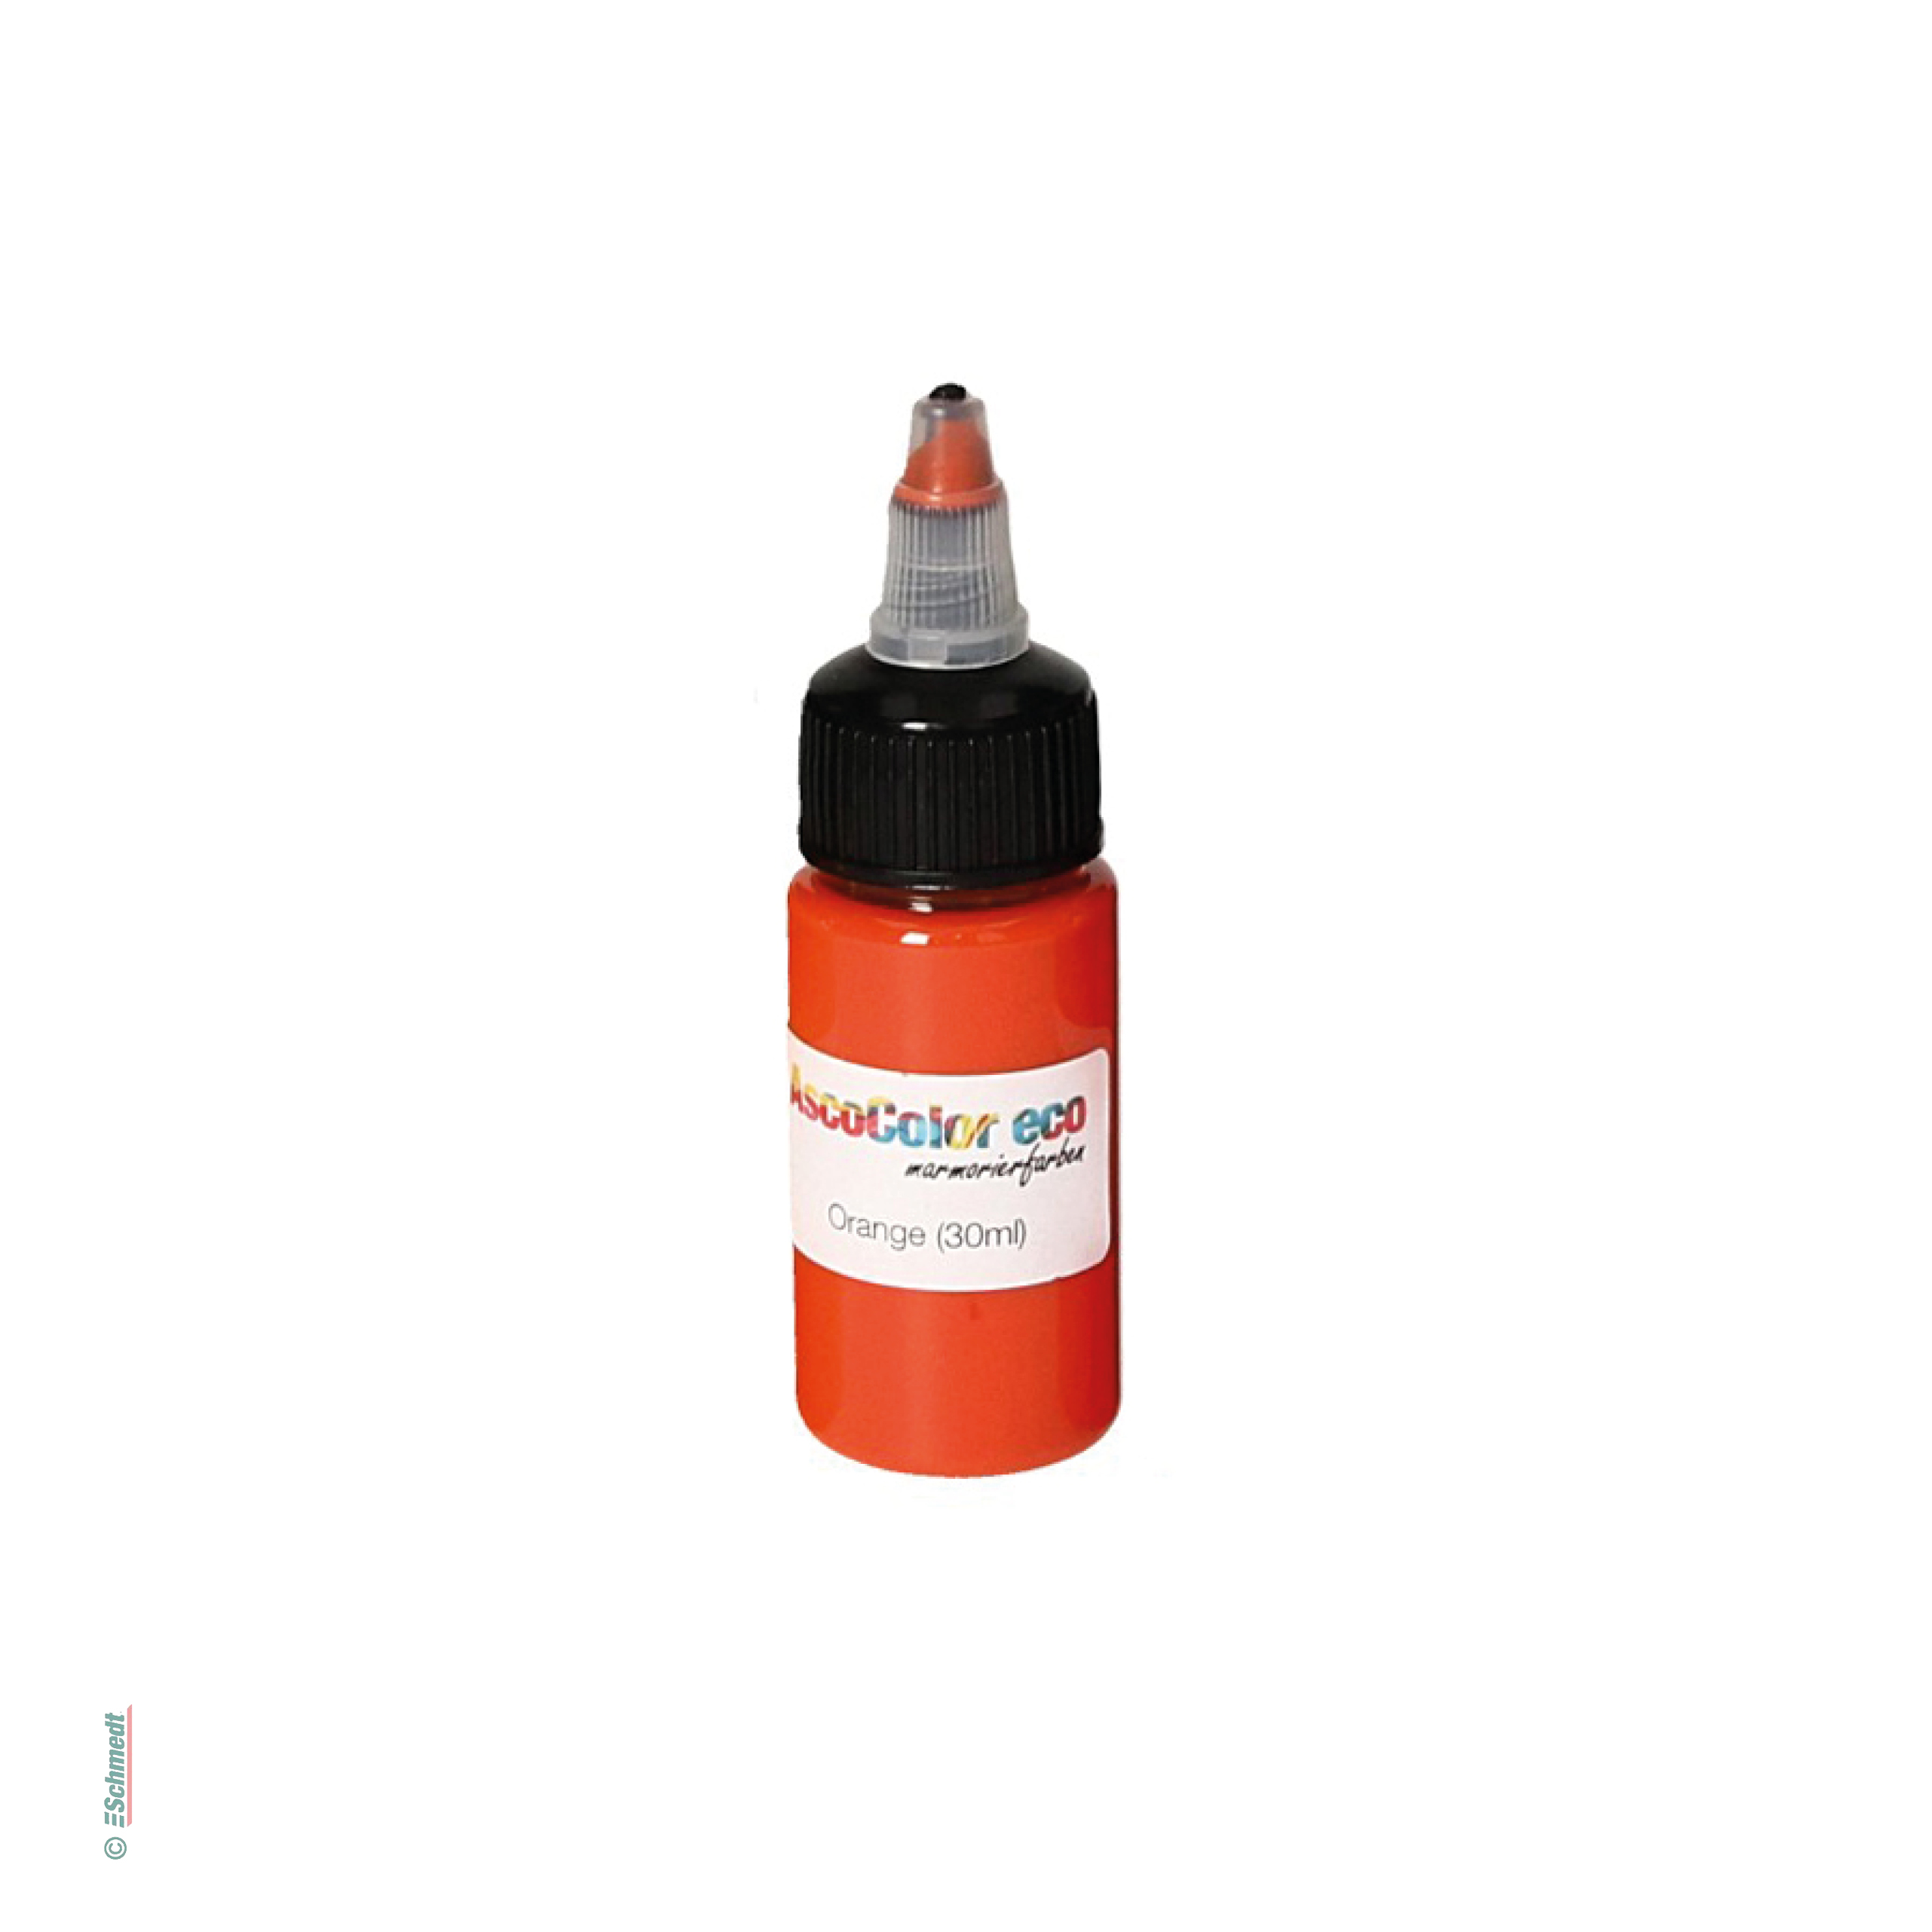 AscoColor eco - Pintura para marmolar - Color 102 - naranja - Contenido Botella / 30 ml - Aplicación: para crear sus propios papeles marmola...